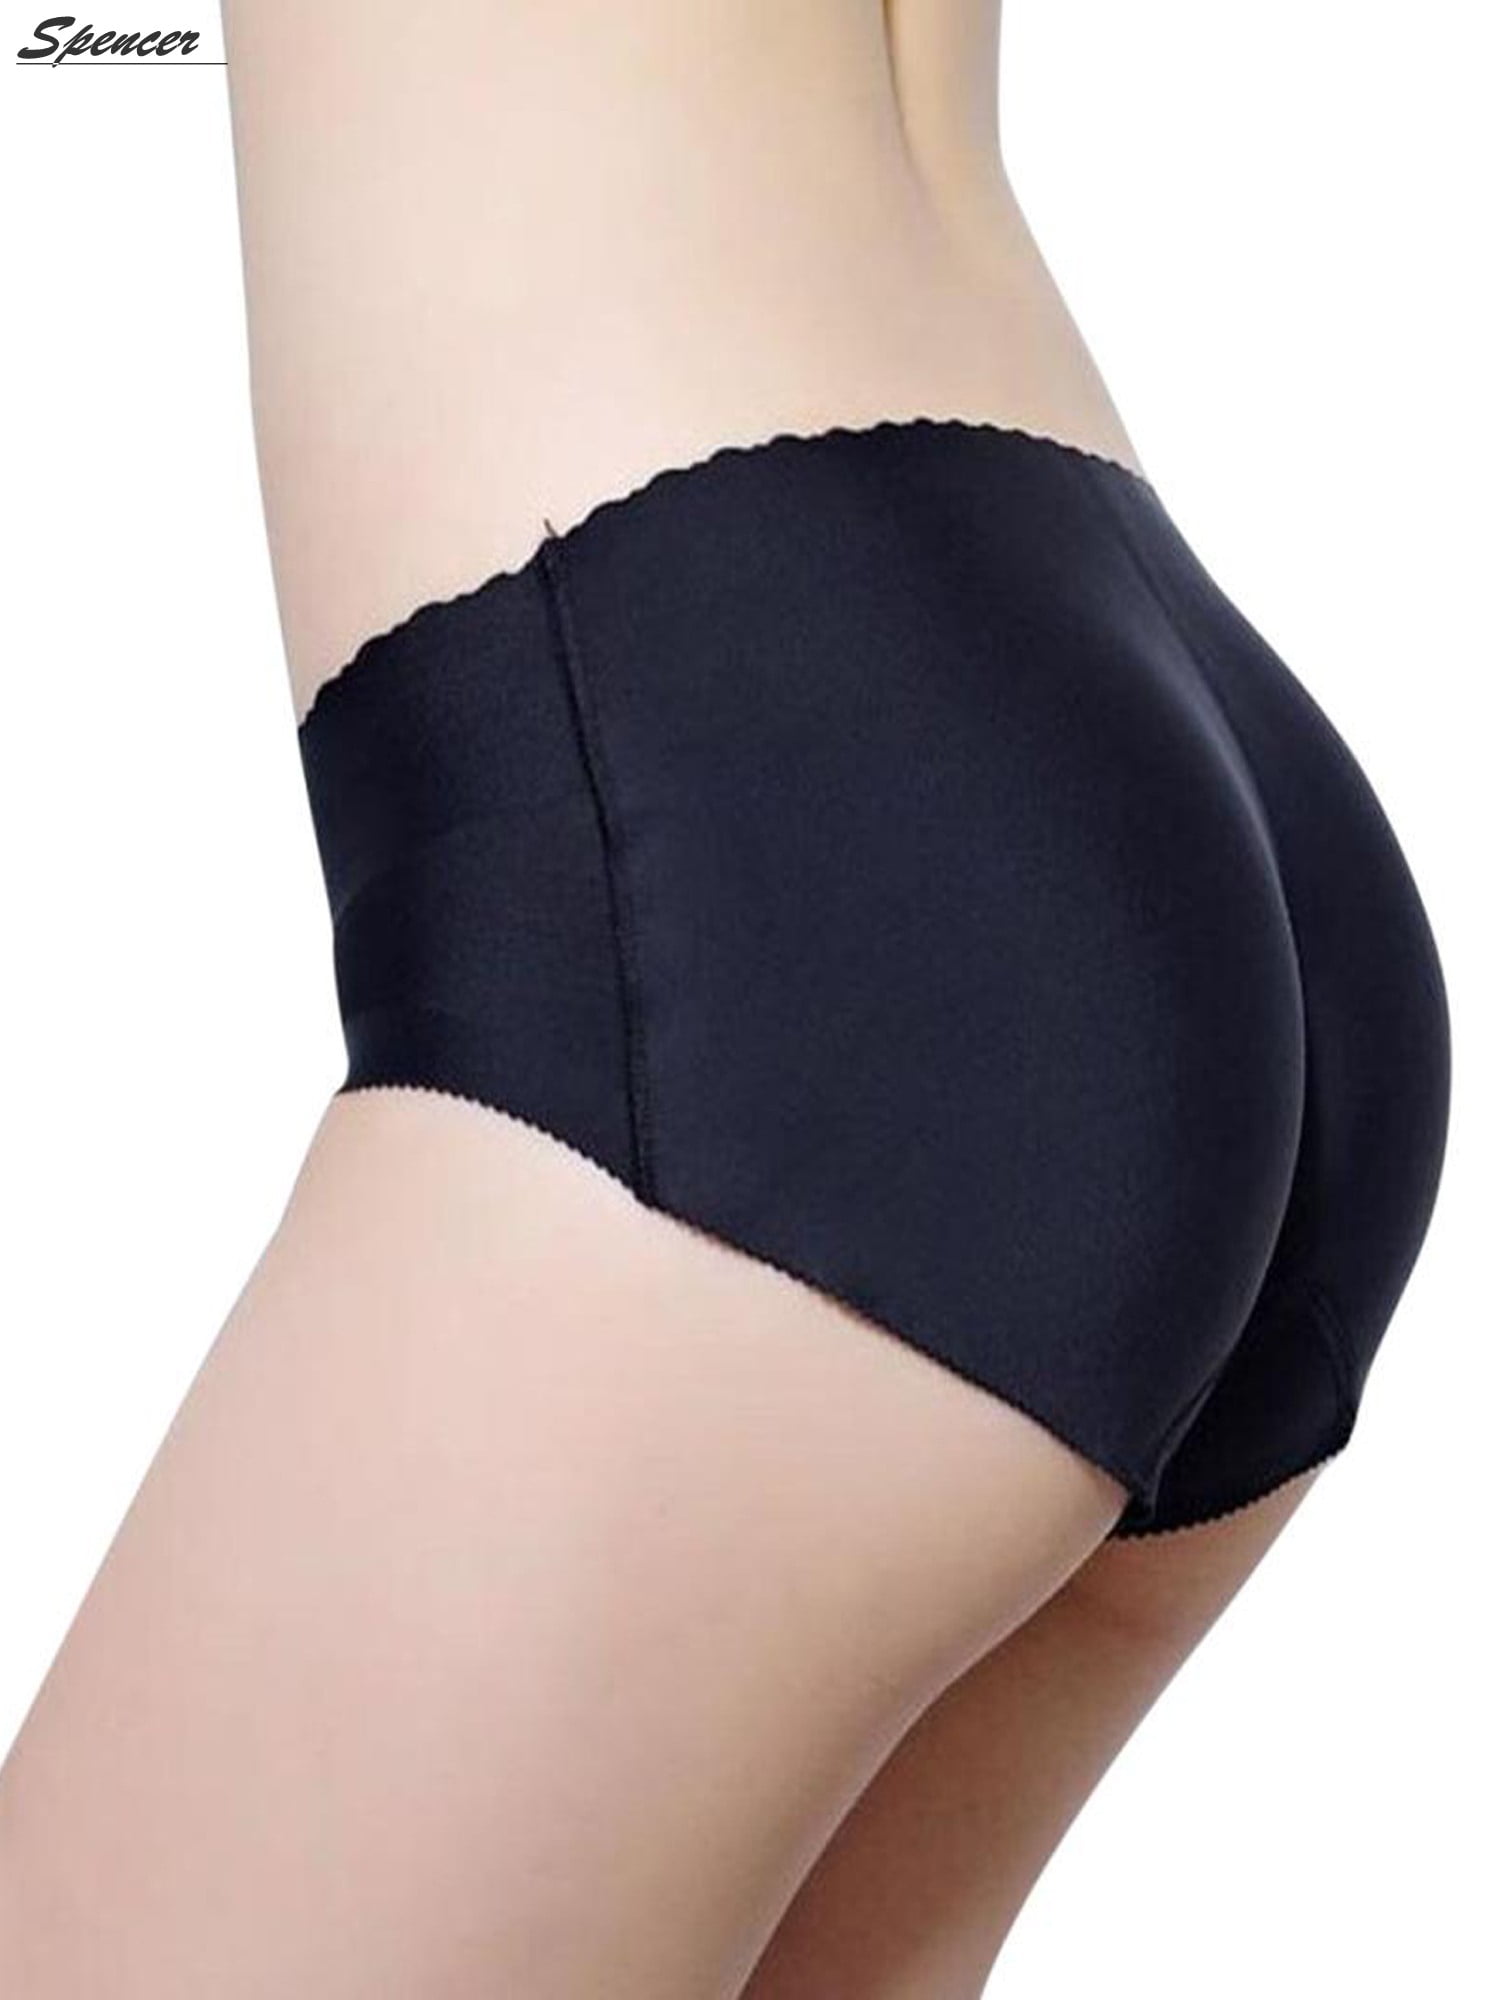 Spencer 1 Pair Enhancing Underwear Pad Stickers Bum Rich Buttock Hip Up Padded  Butt Lifter Shapewear XL,Black 